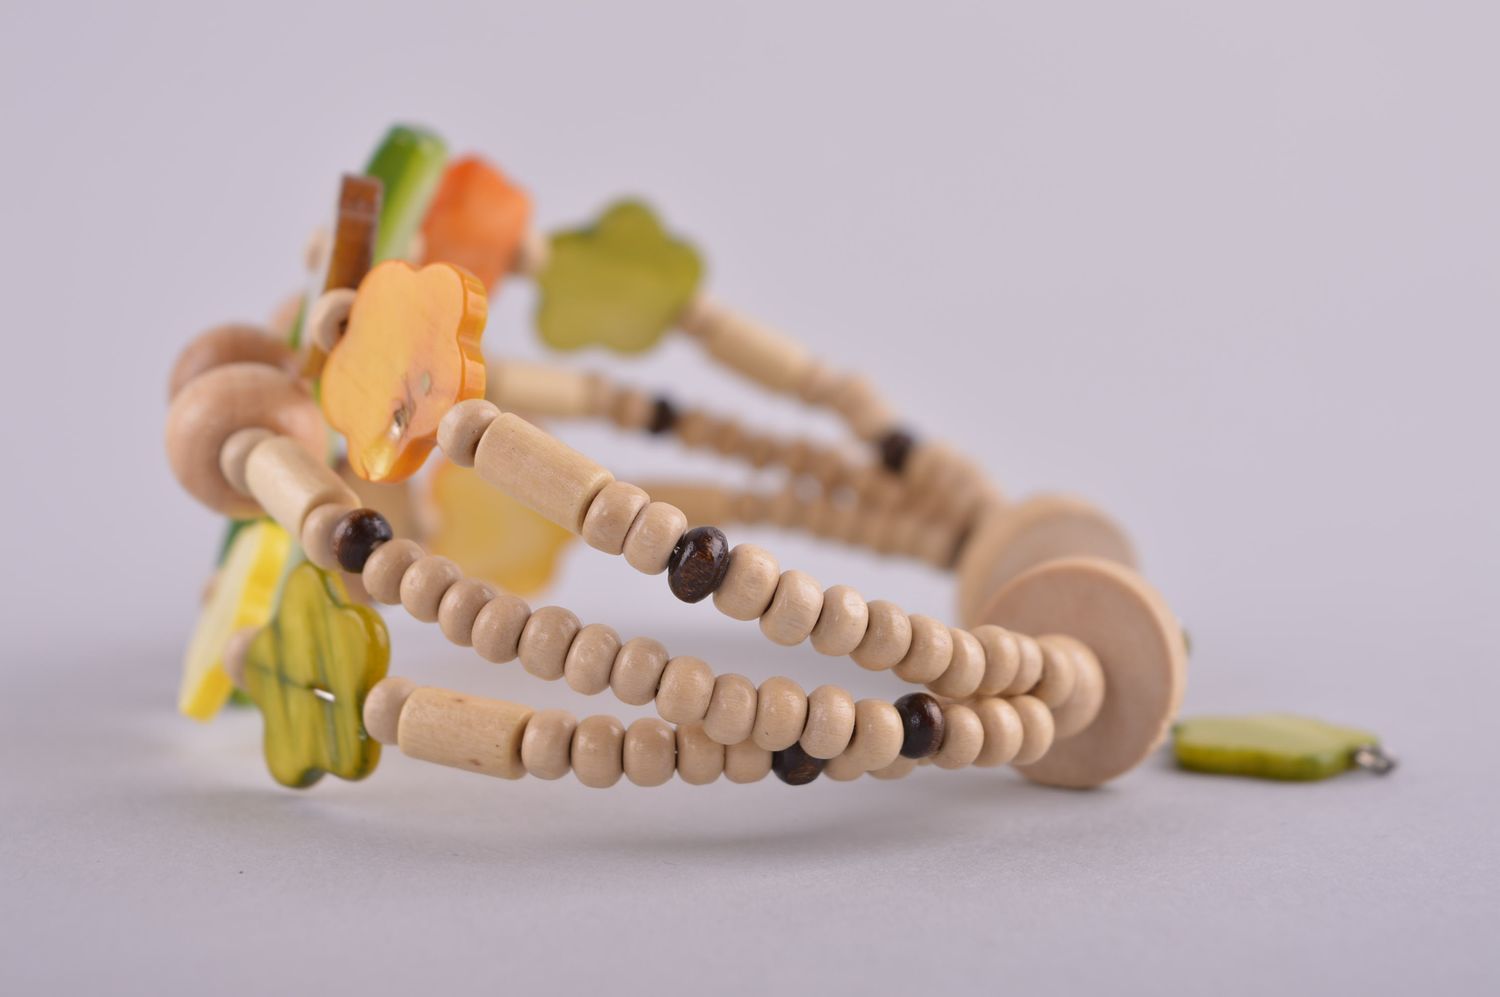 Homemade wooden beads three-row wrist bracelet for women photo 3